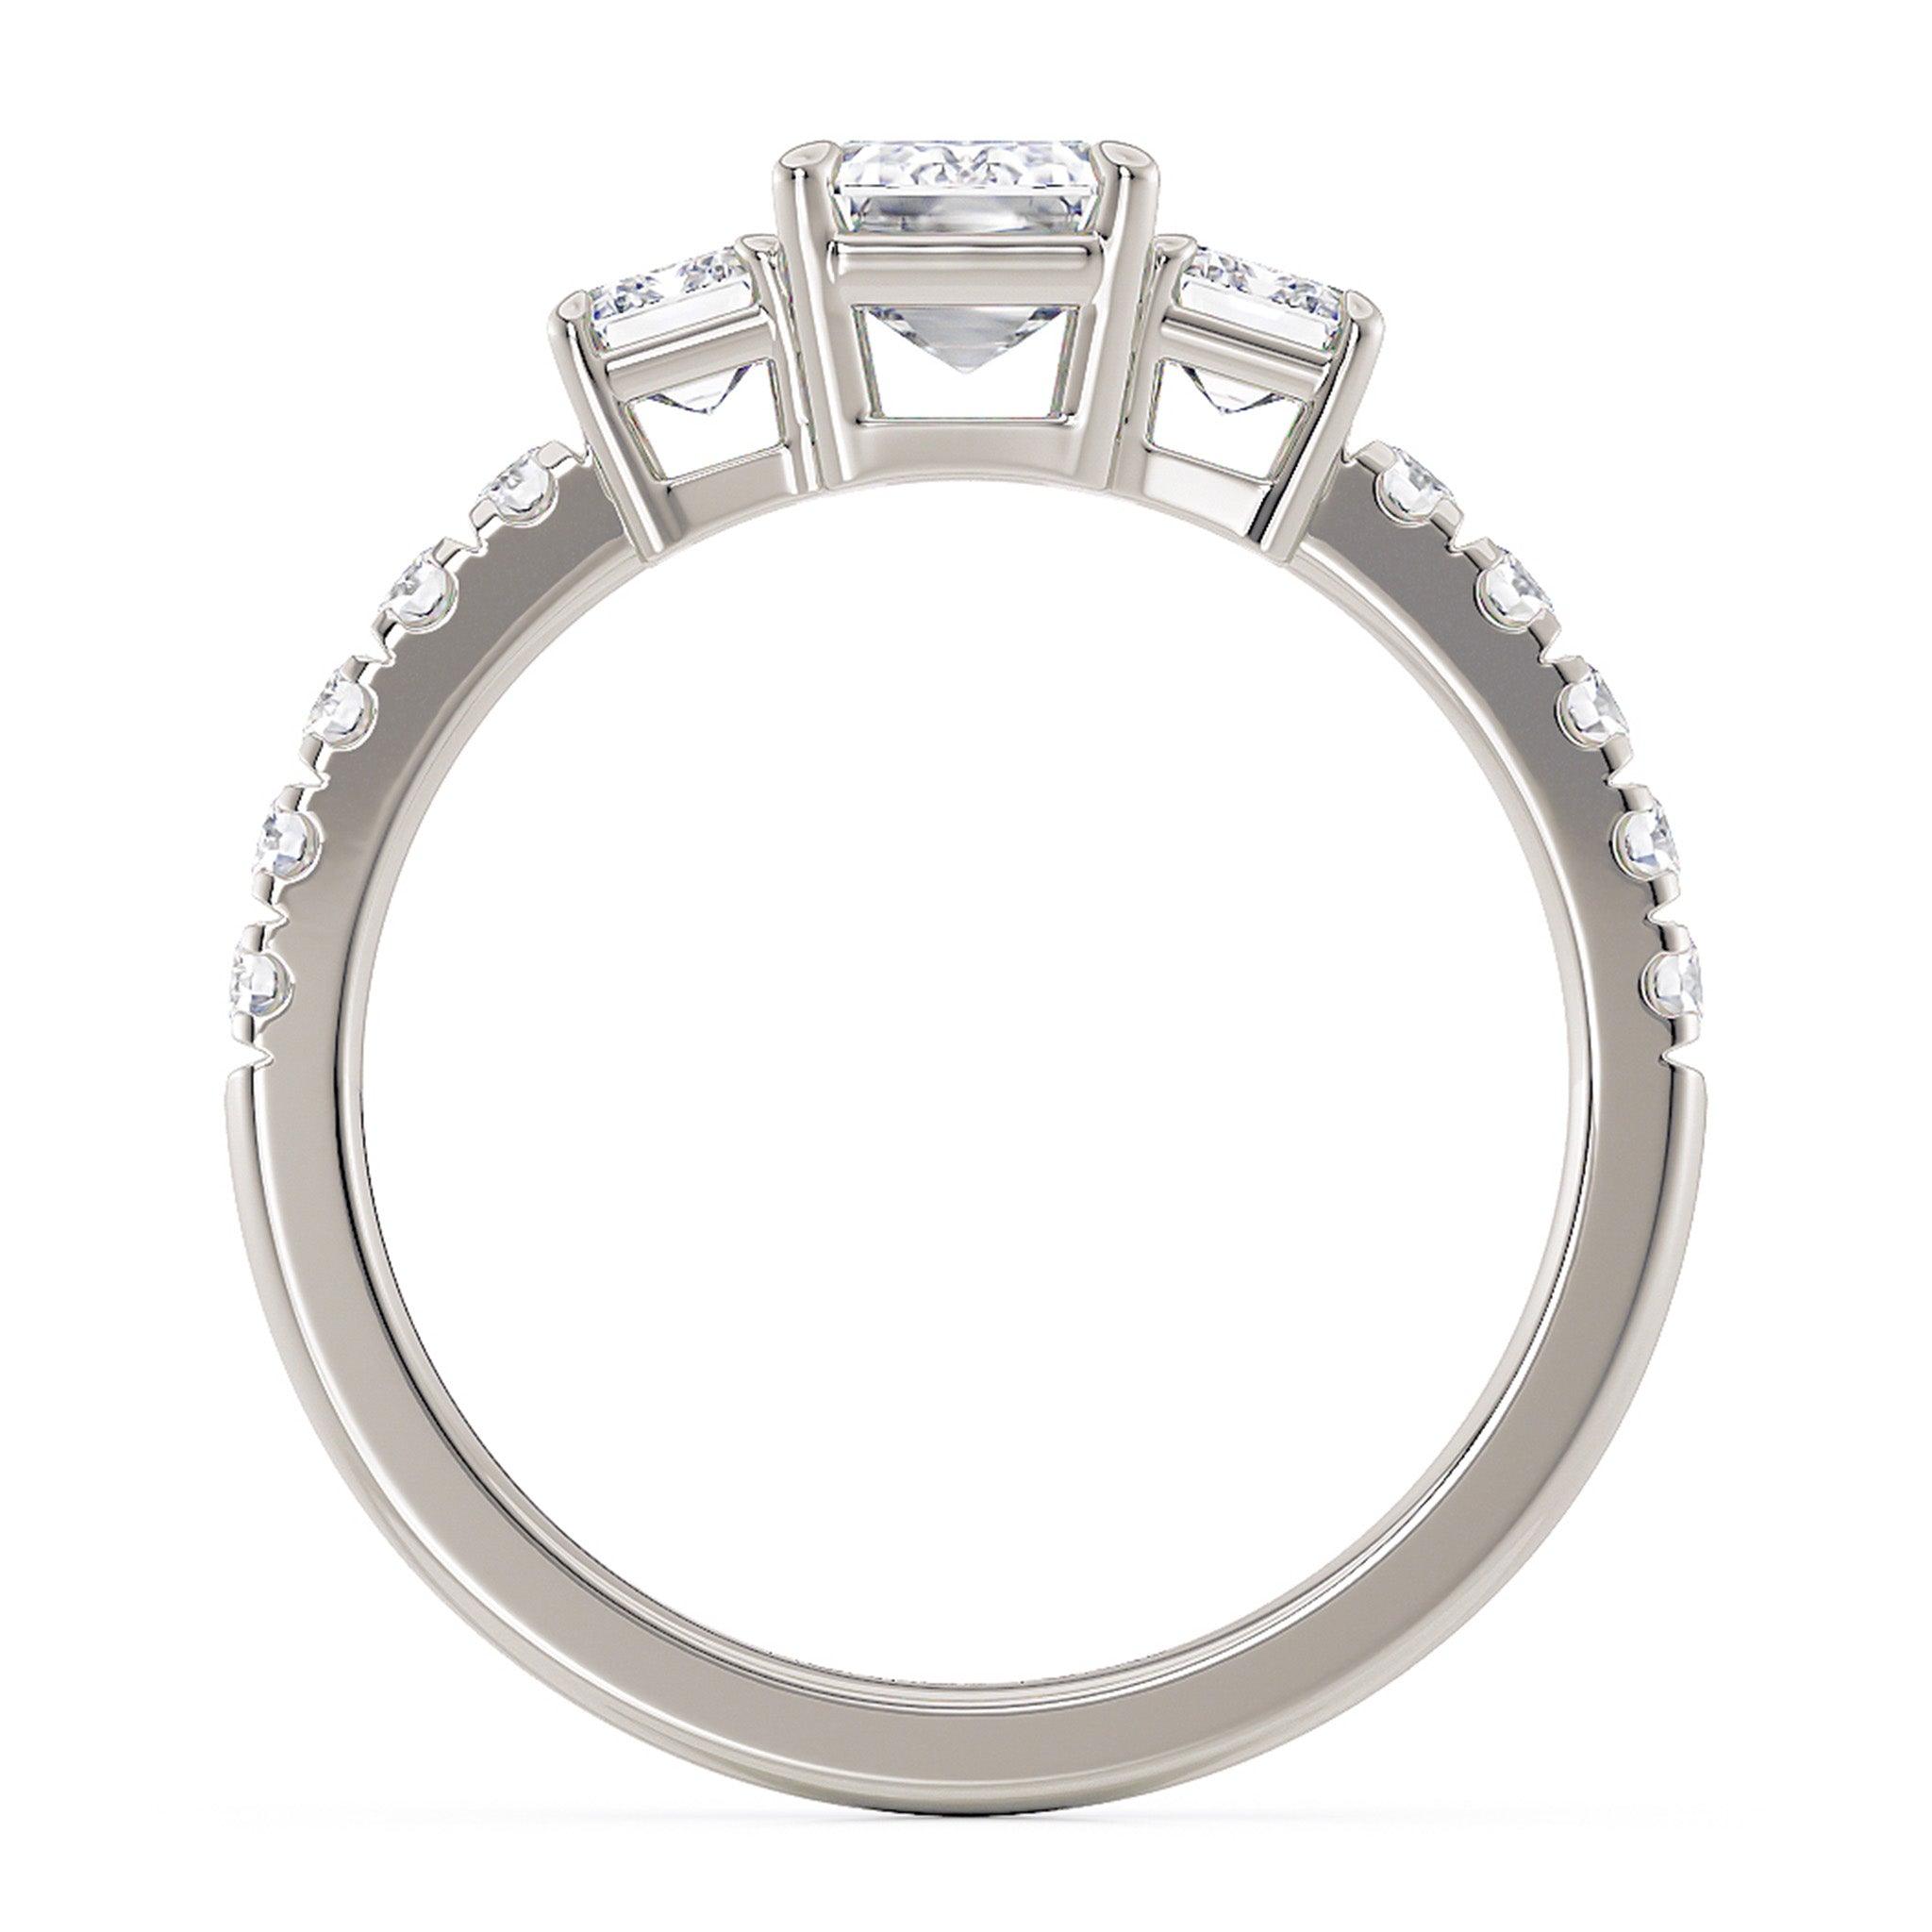 Adele emerald cut diamond ring side view